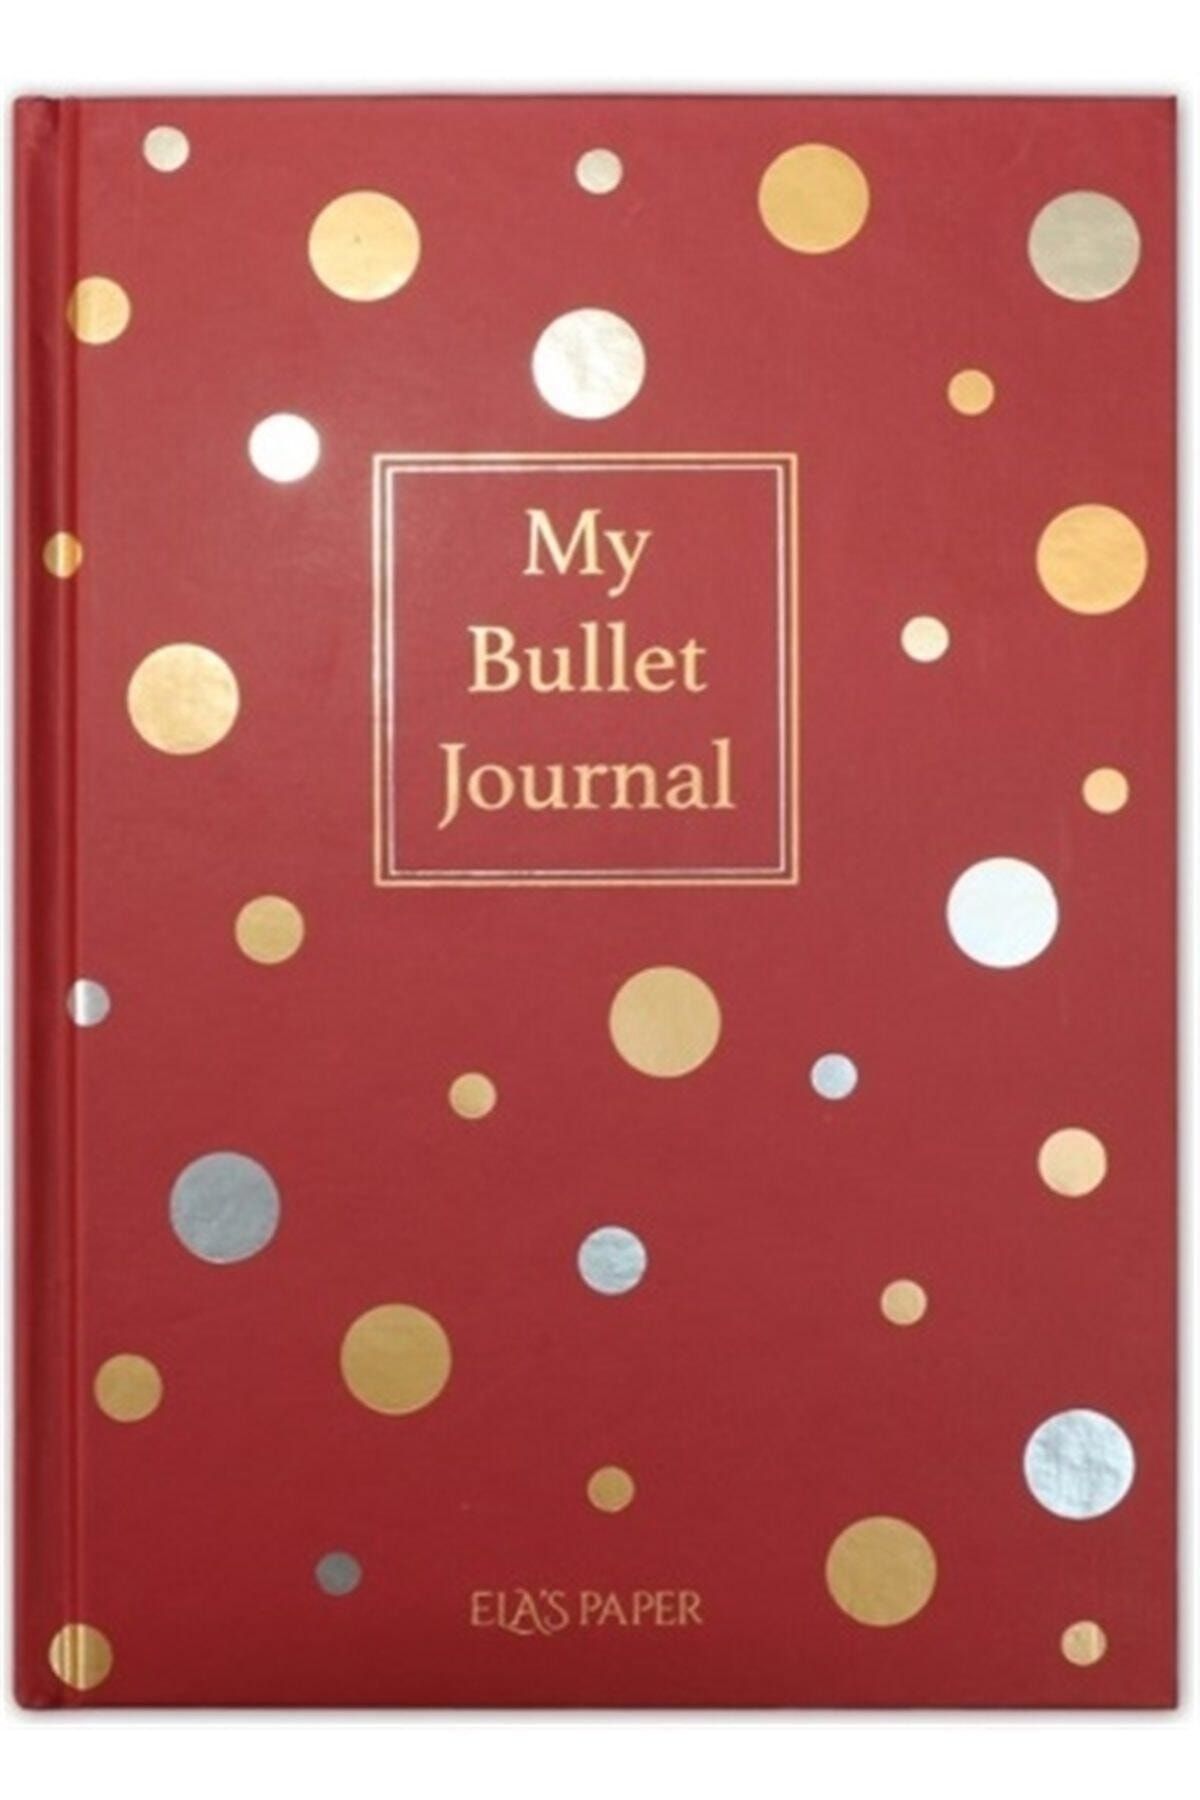 ELAS PAPER My Bullet Journal Defter (Confetti Kırmızı)